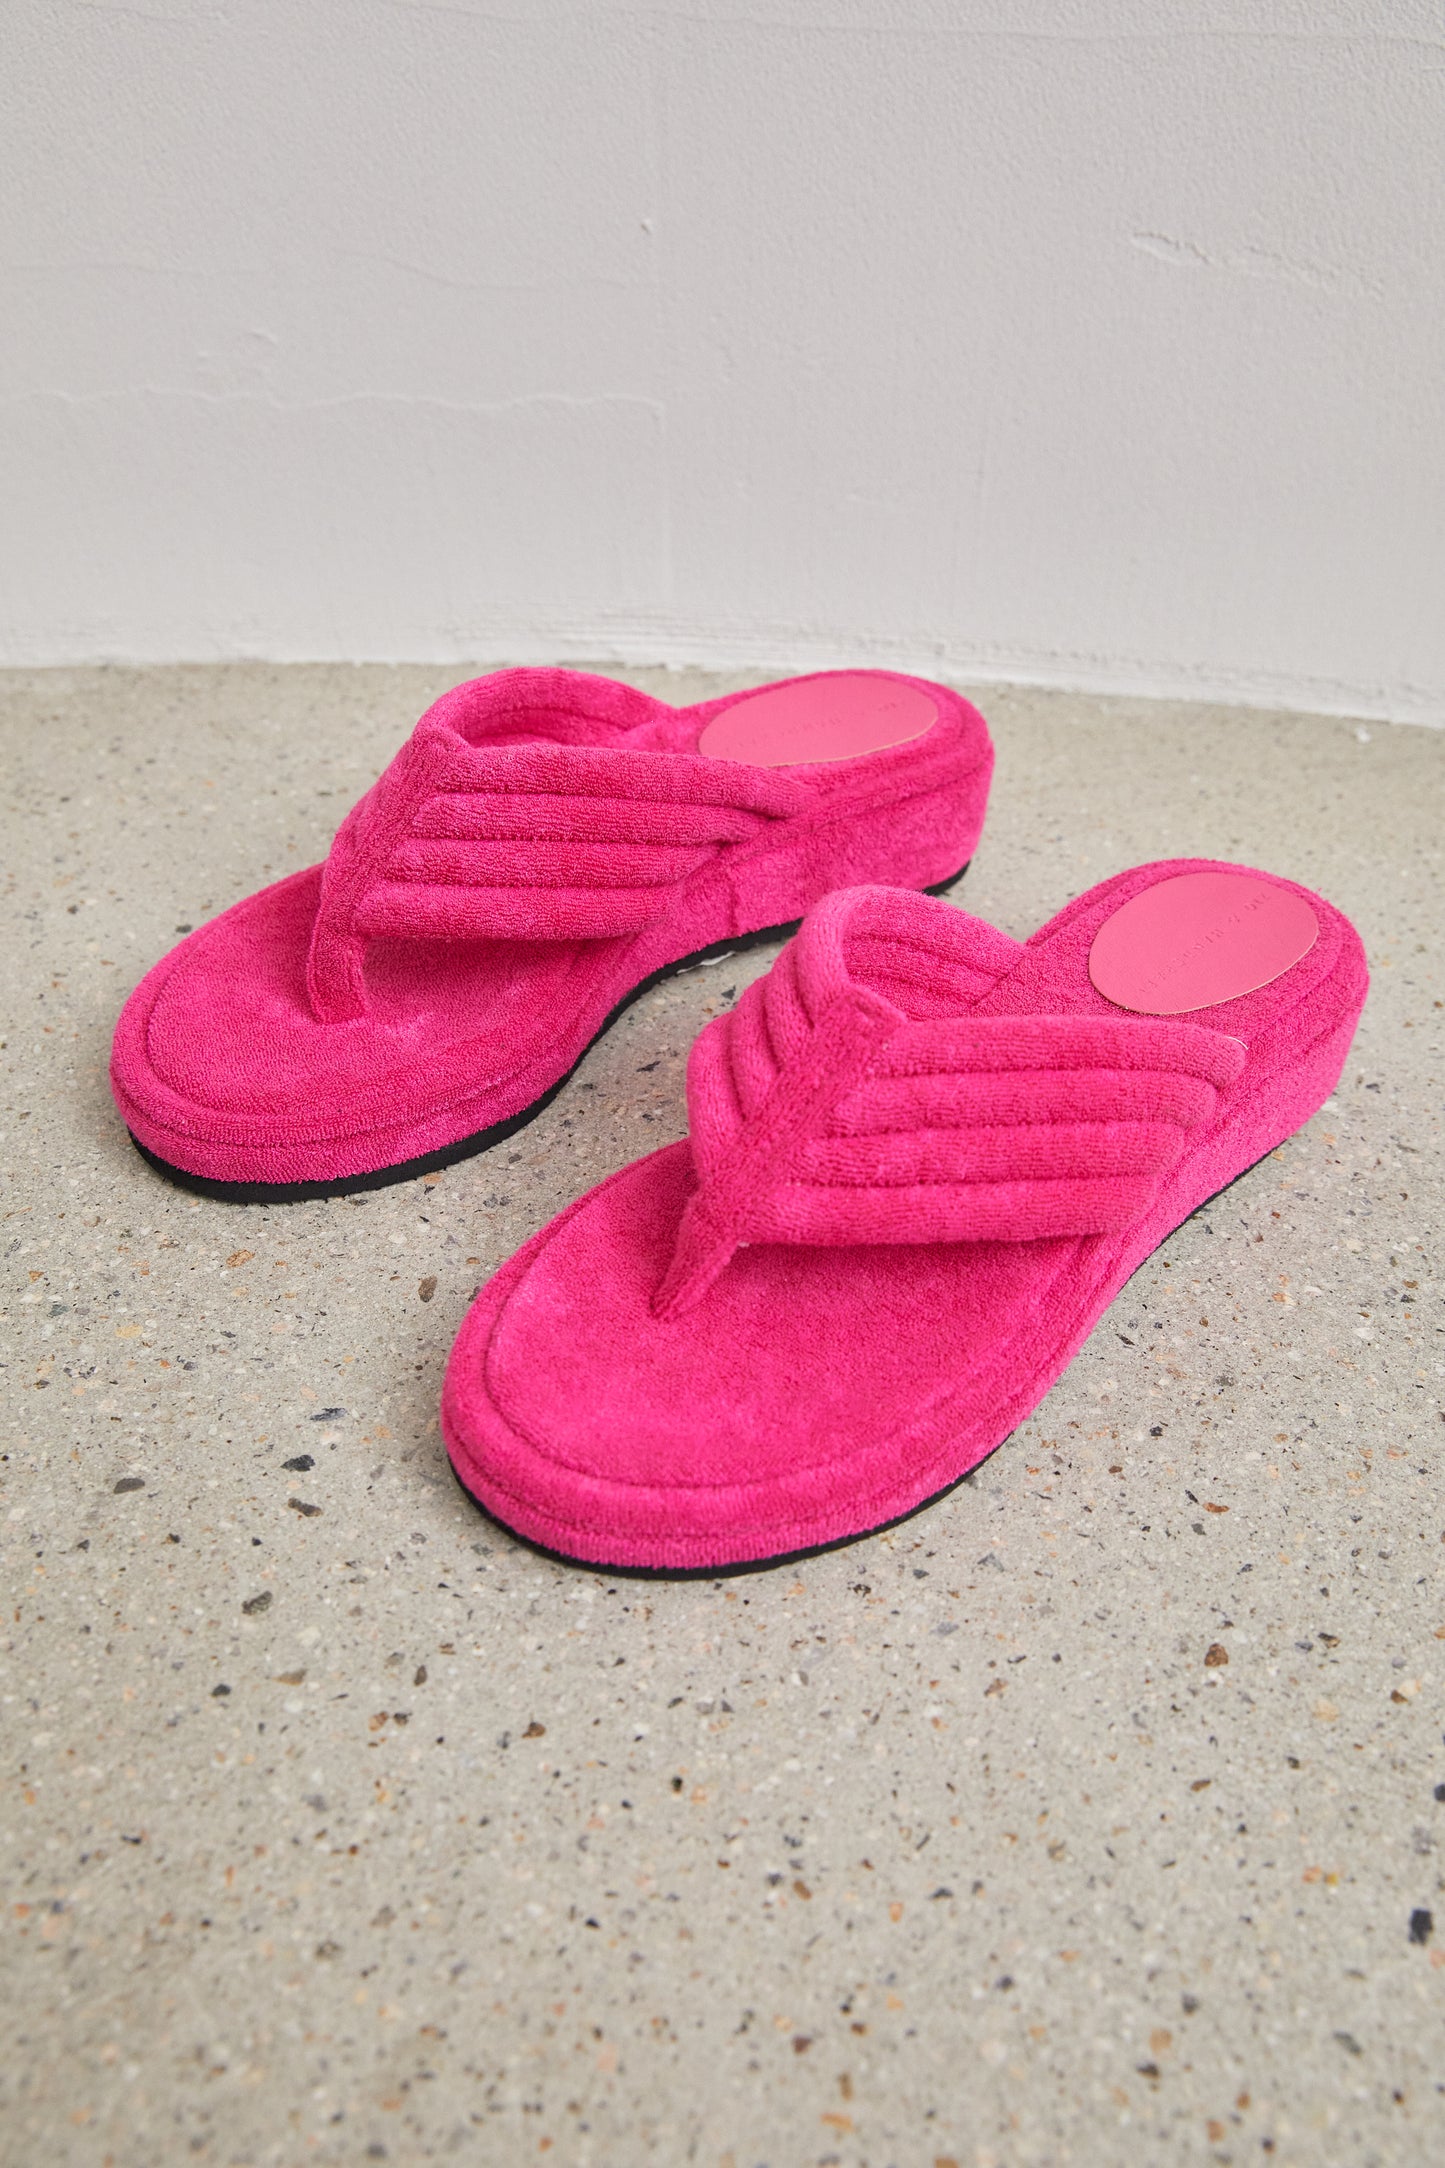 Terry Cloth Fleece Sandals, Fuchsia Pink